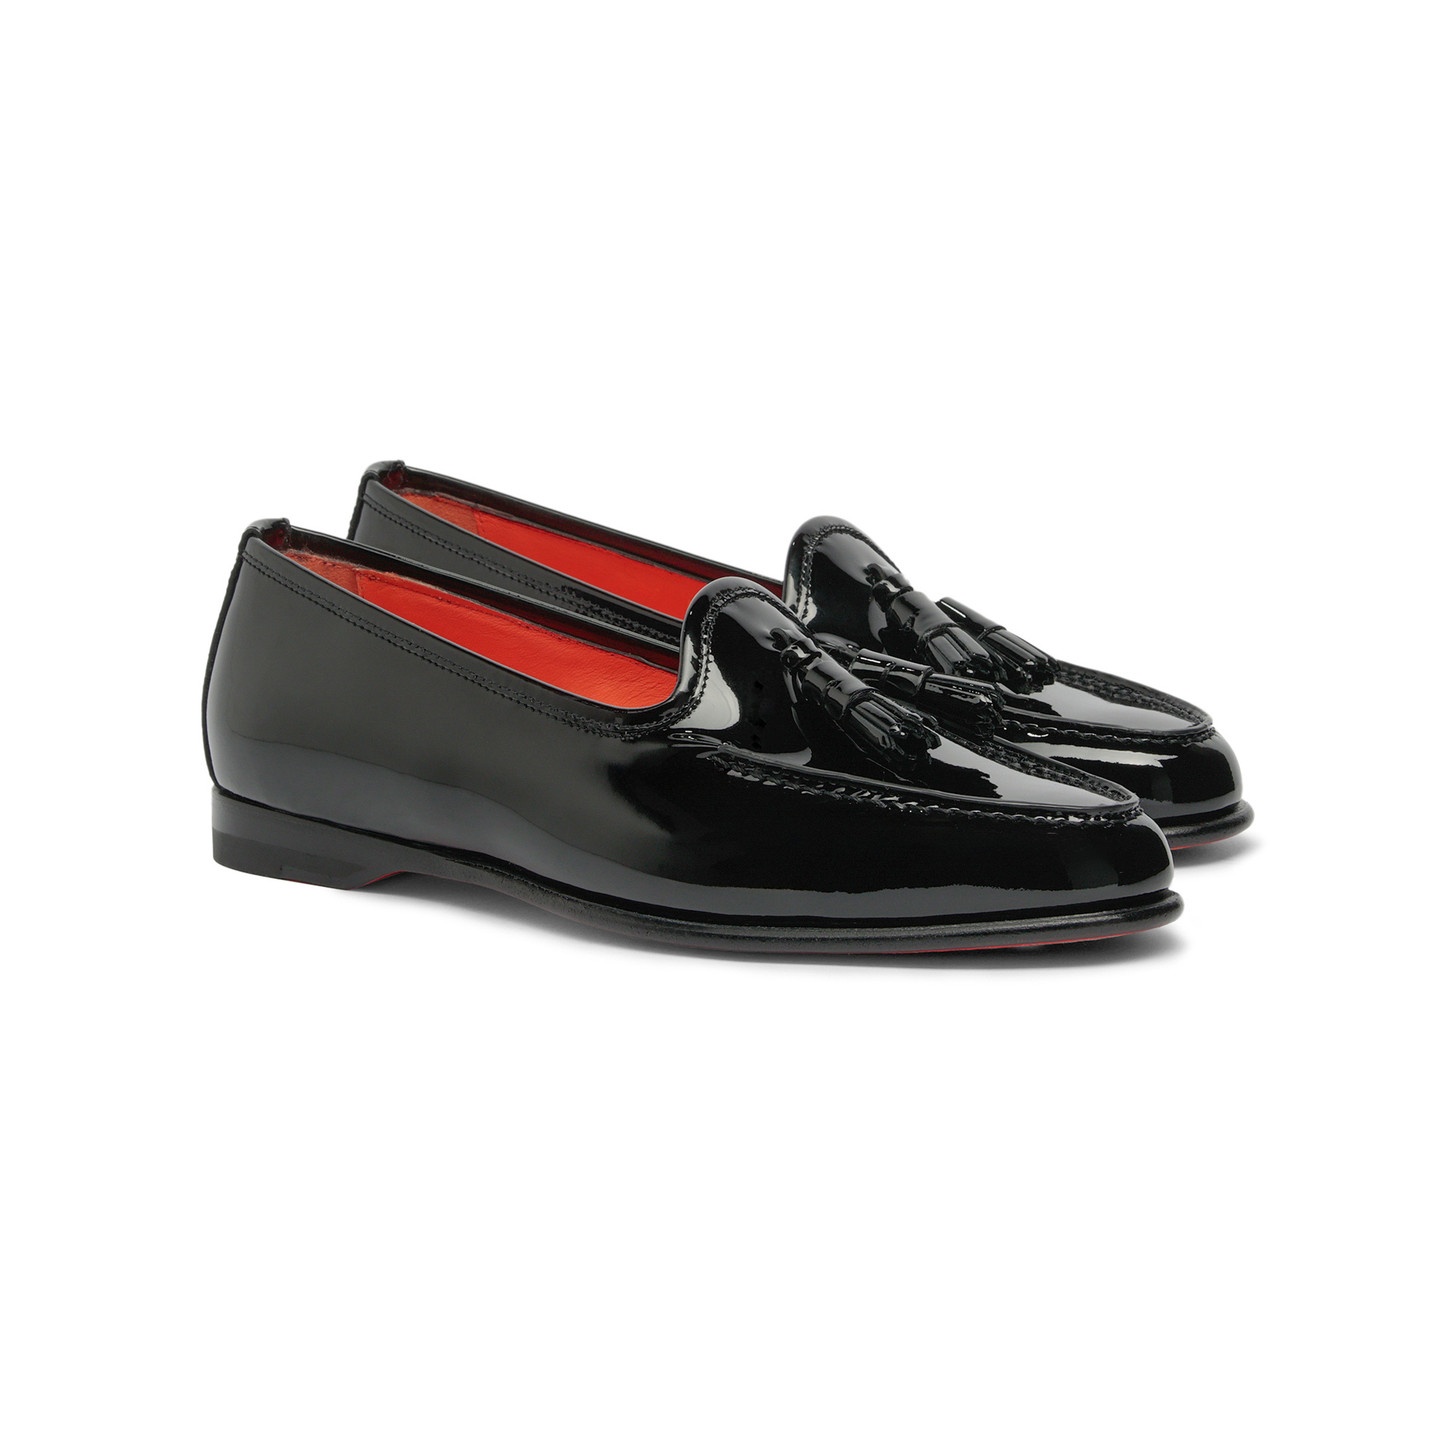 Women’s black patent leather Andrea tassel loafer - 3